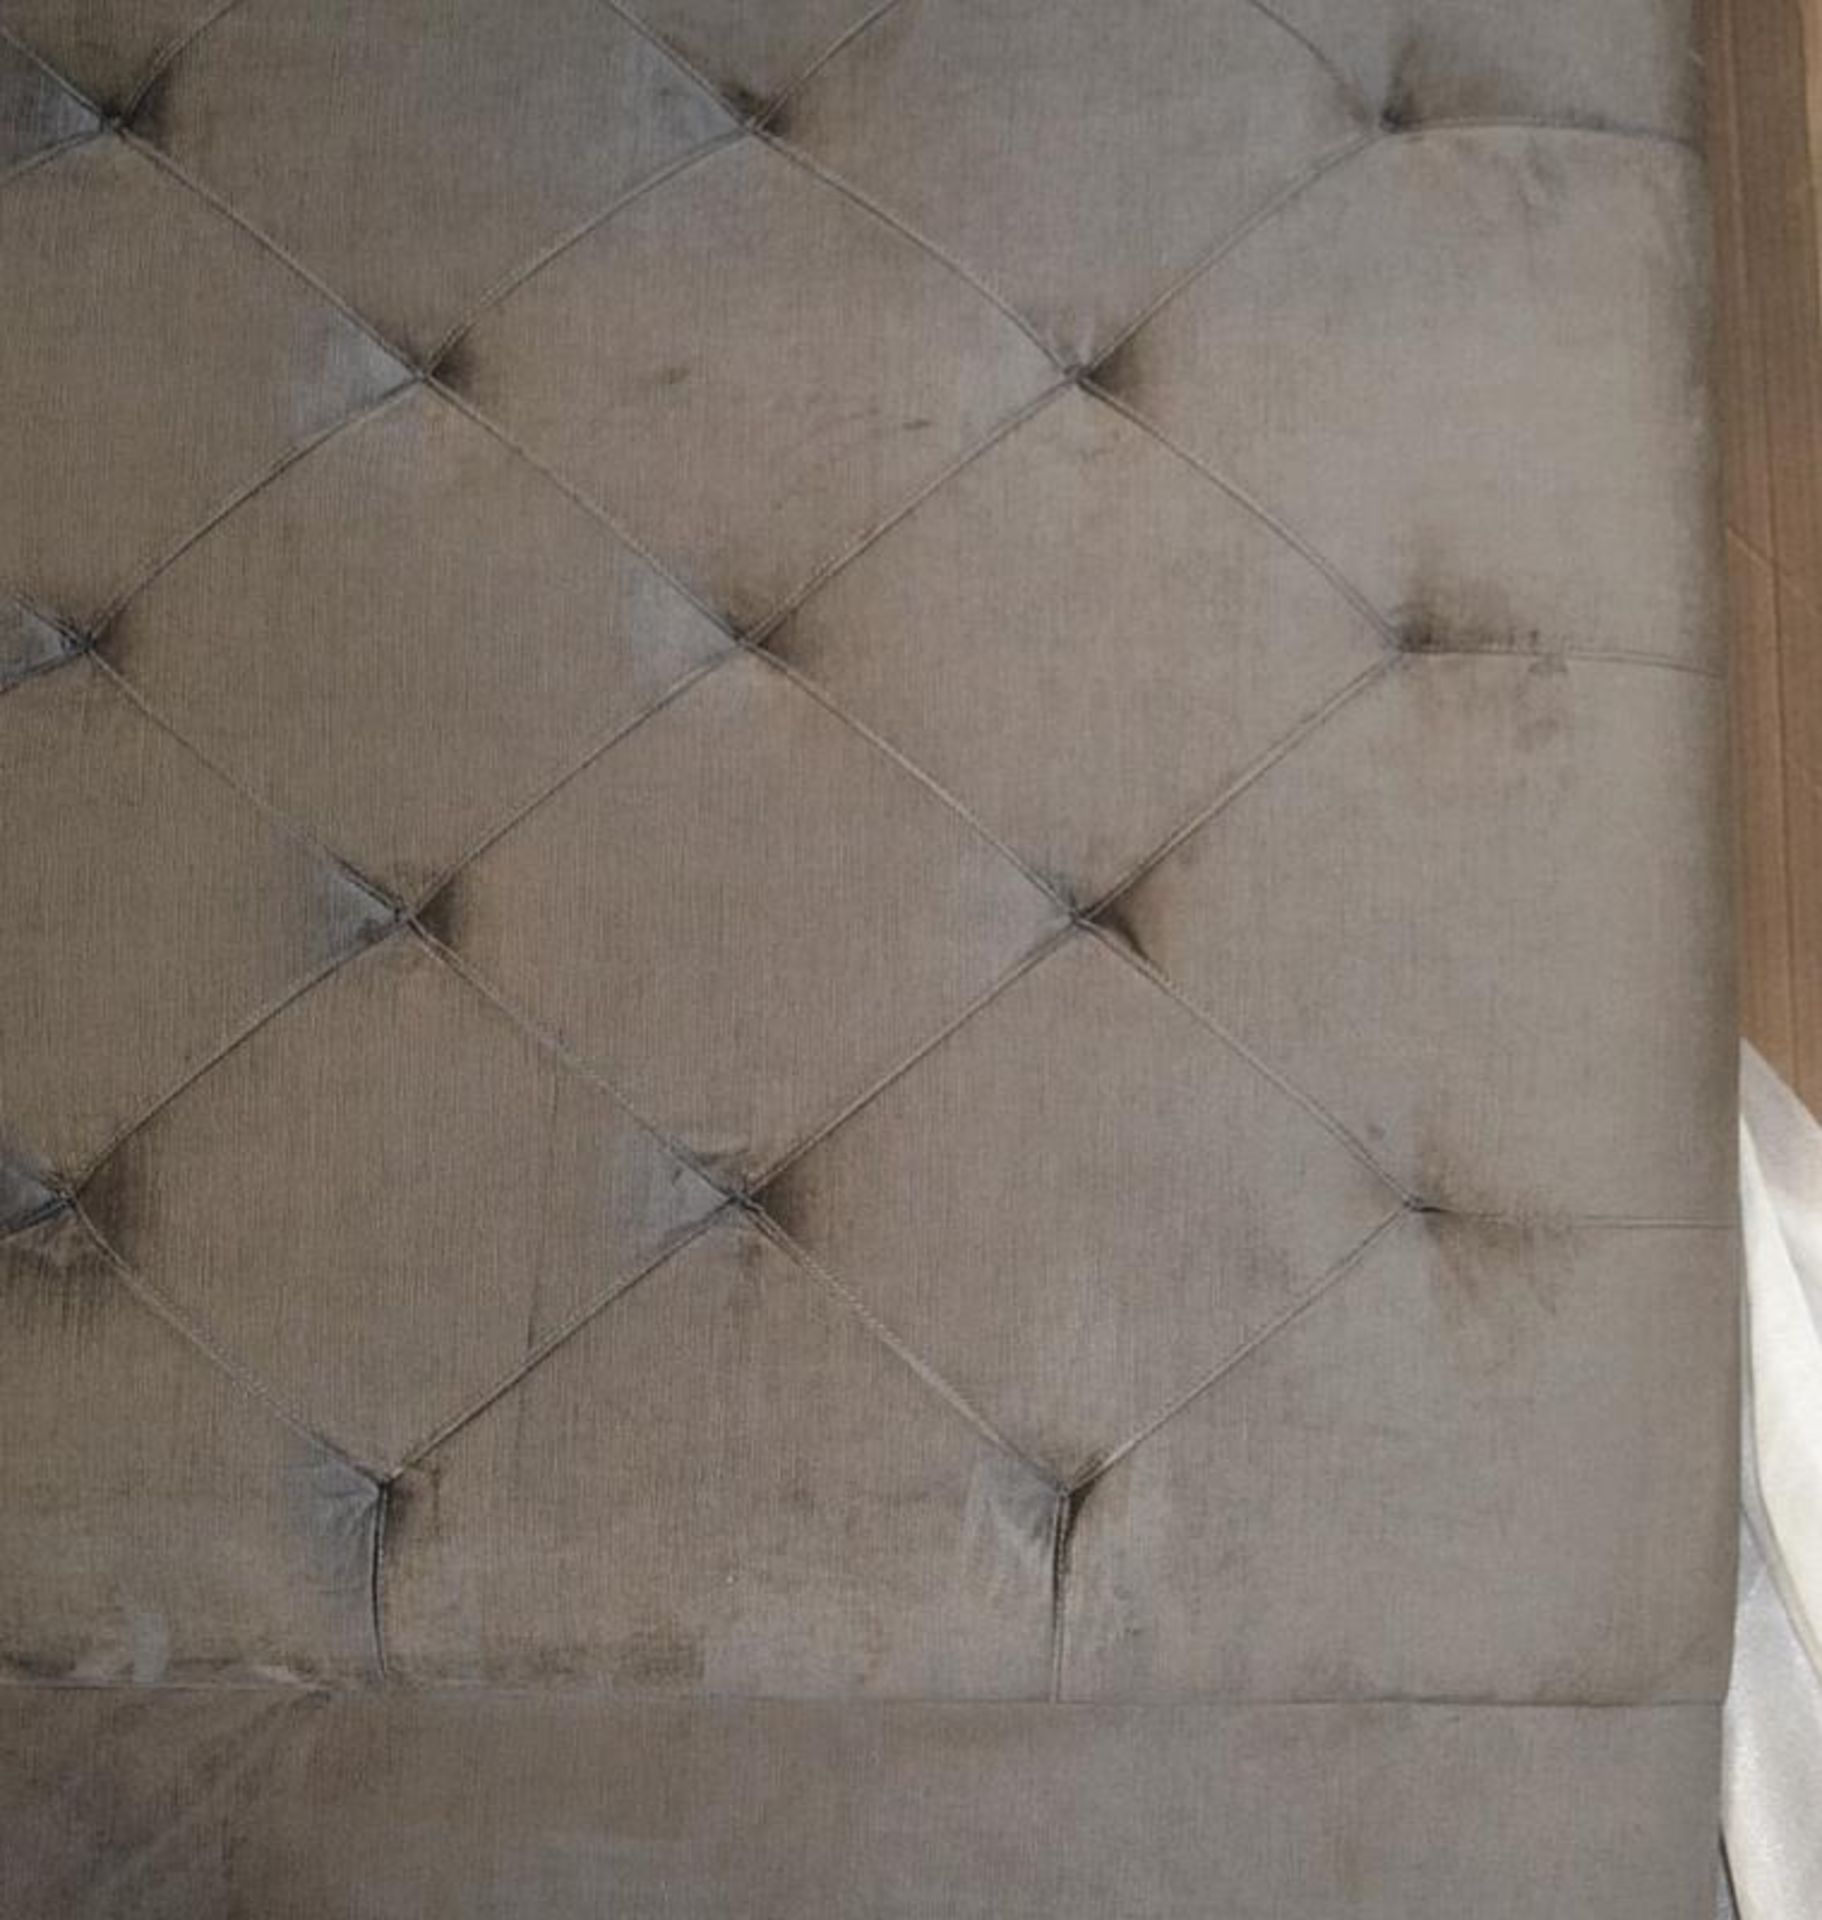 1 x Eichholtz 'Cesare ' Chesterfield-Inspired Upholstered Headboard In A Granite Grey Velvet - Dime - Image 7 of 10